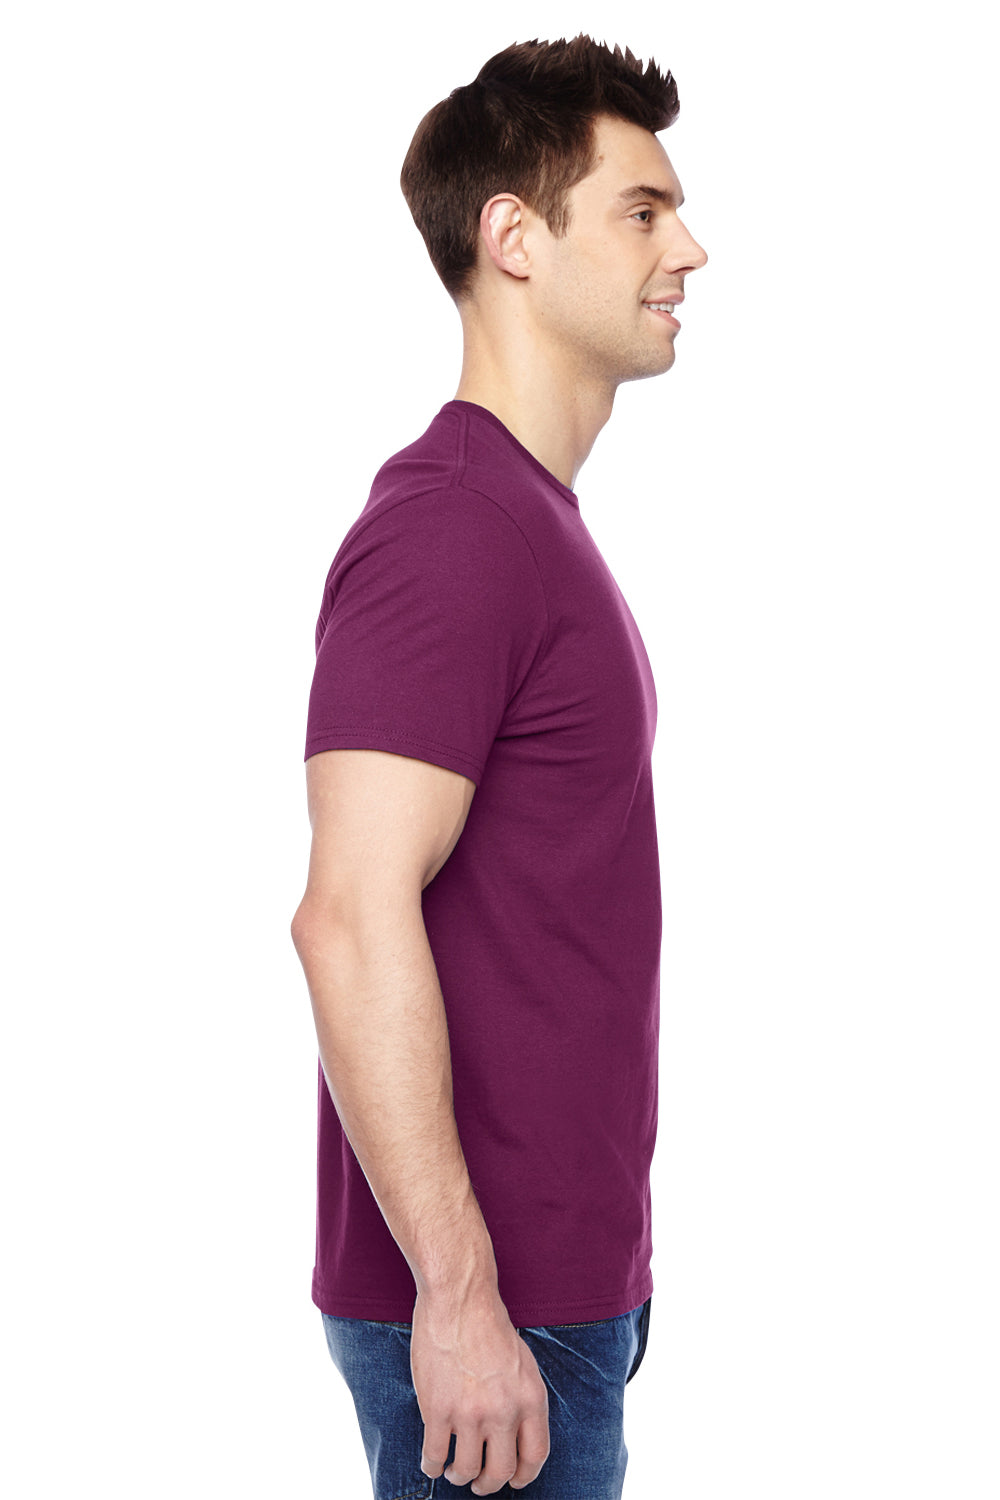 Fruit Of The Loom SF45R Mens Sofspun Jersey Short Sleeve Crewneck T-Shirt Wild Plum Purple Side